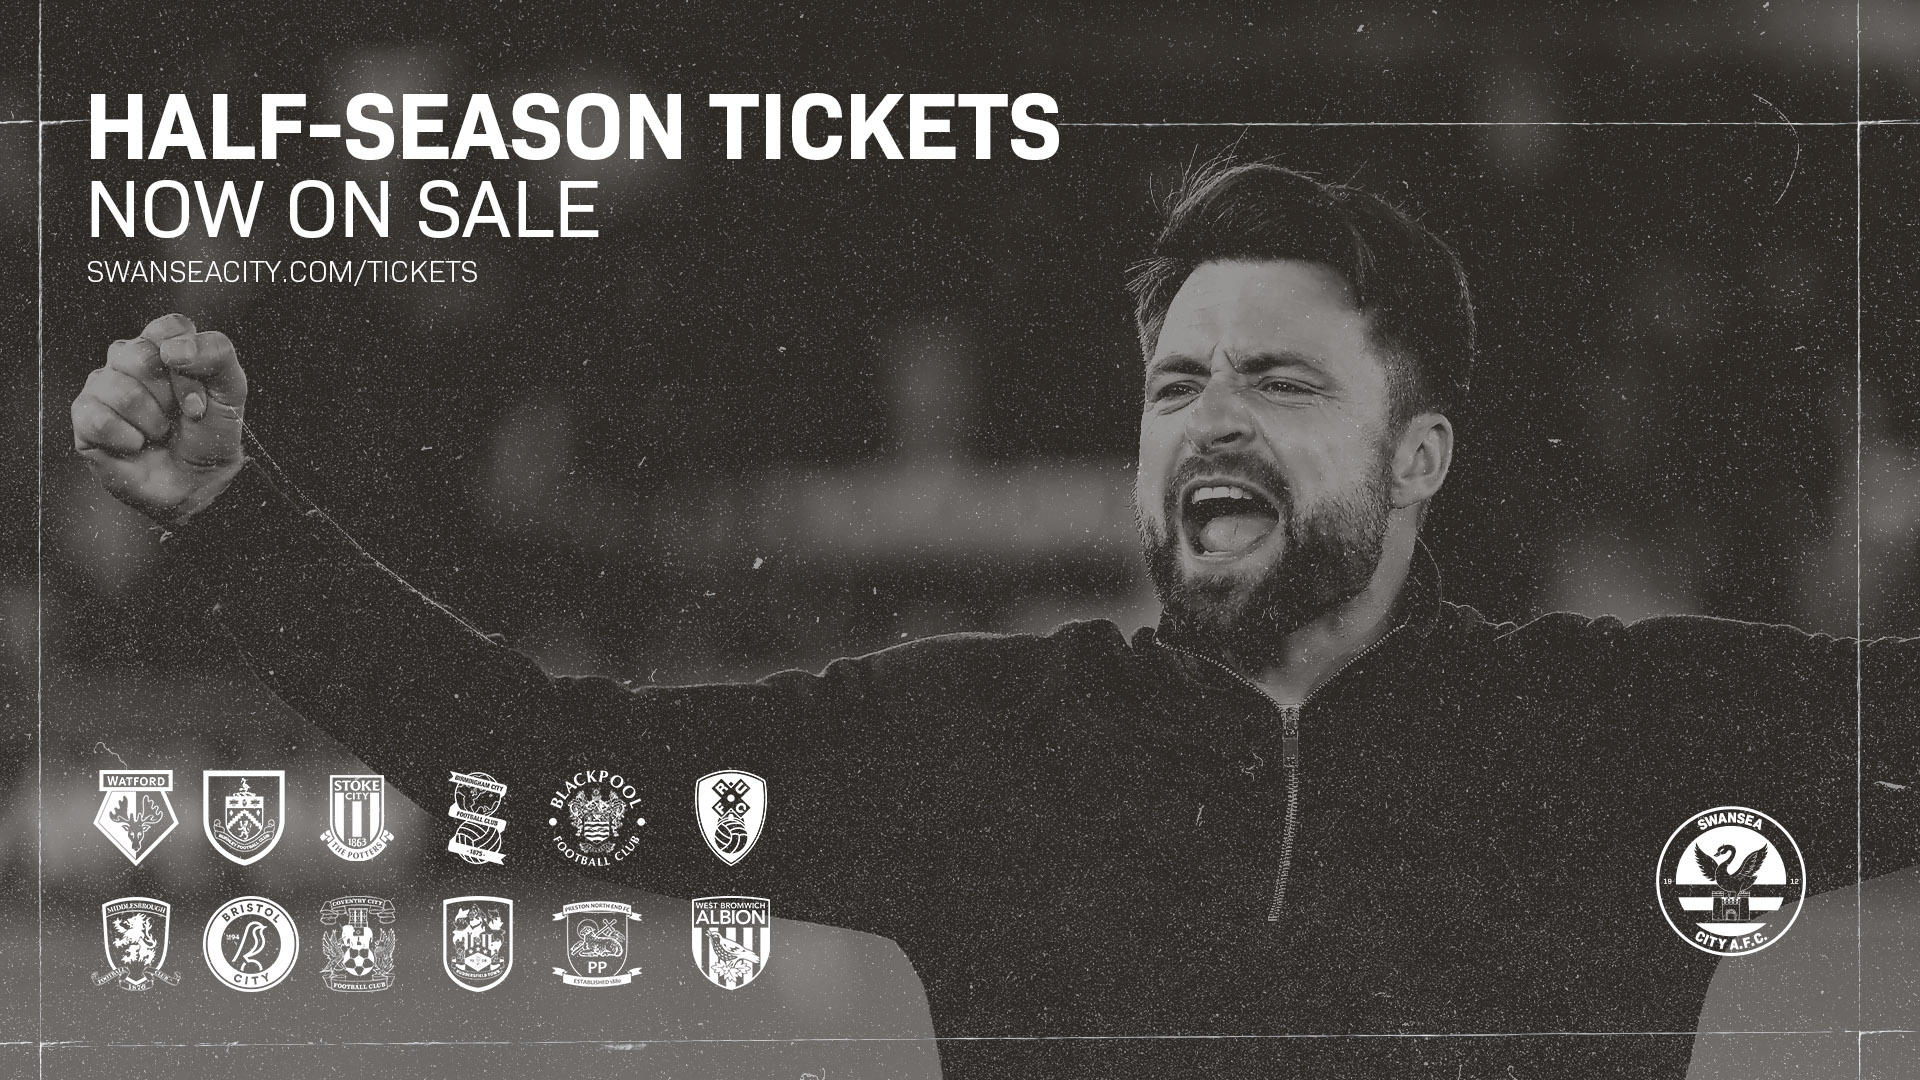 Half-season tickets on sale graphic